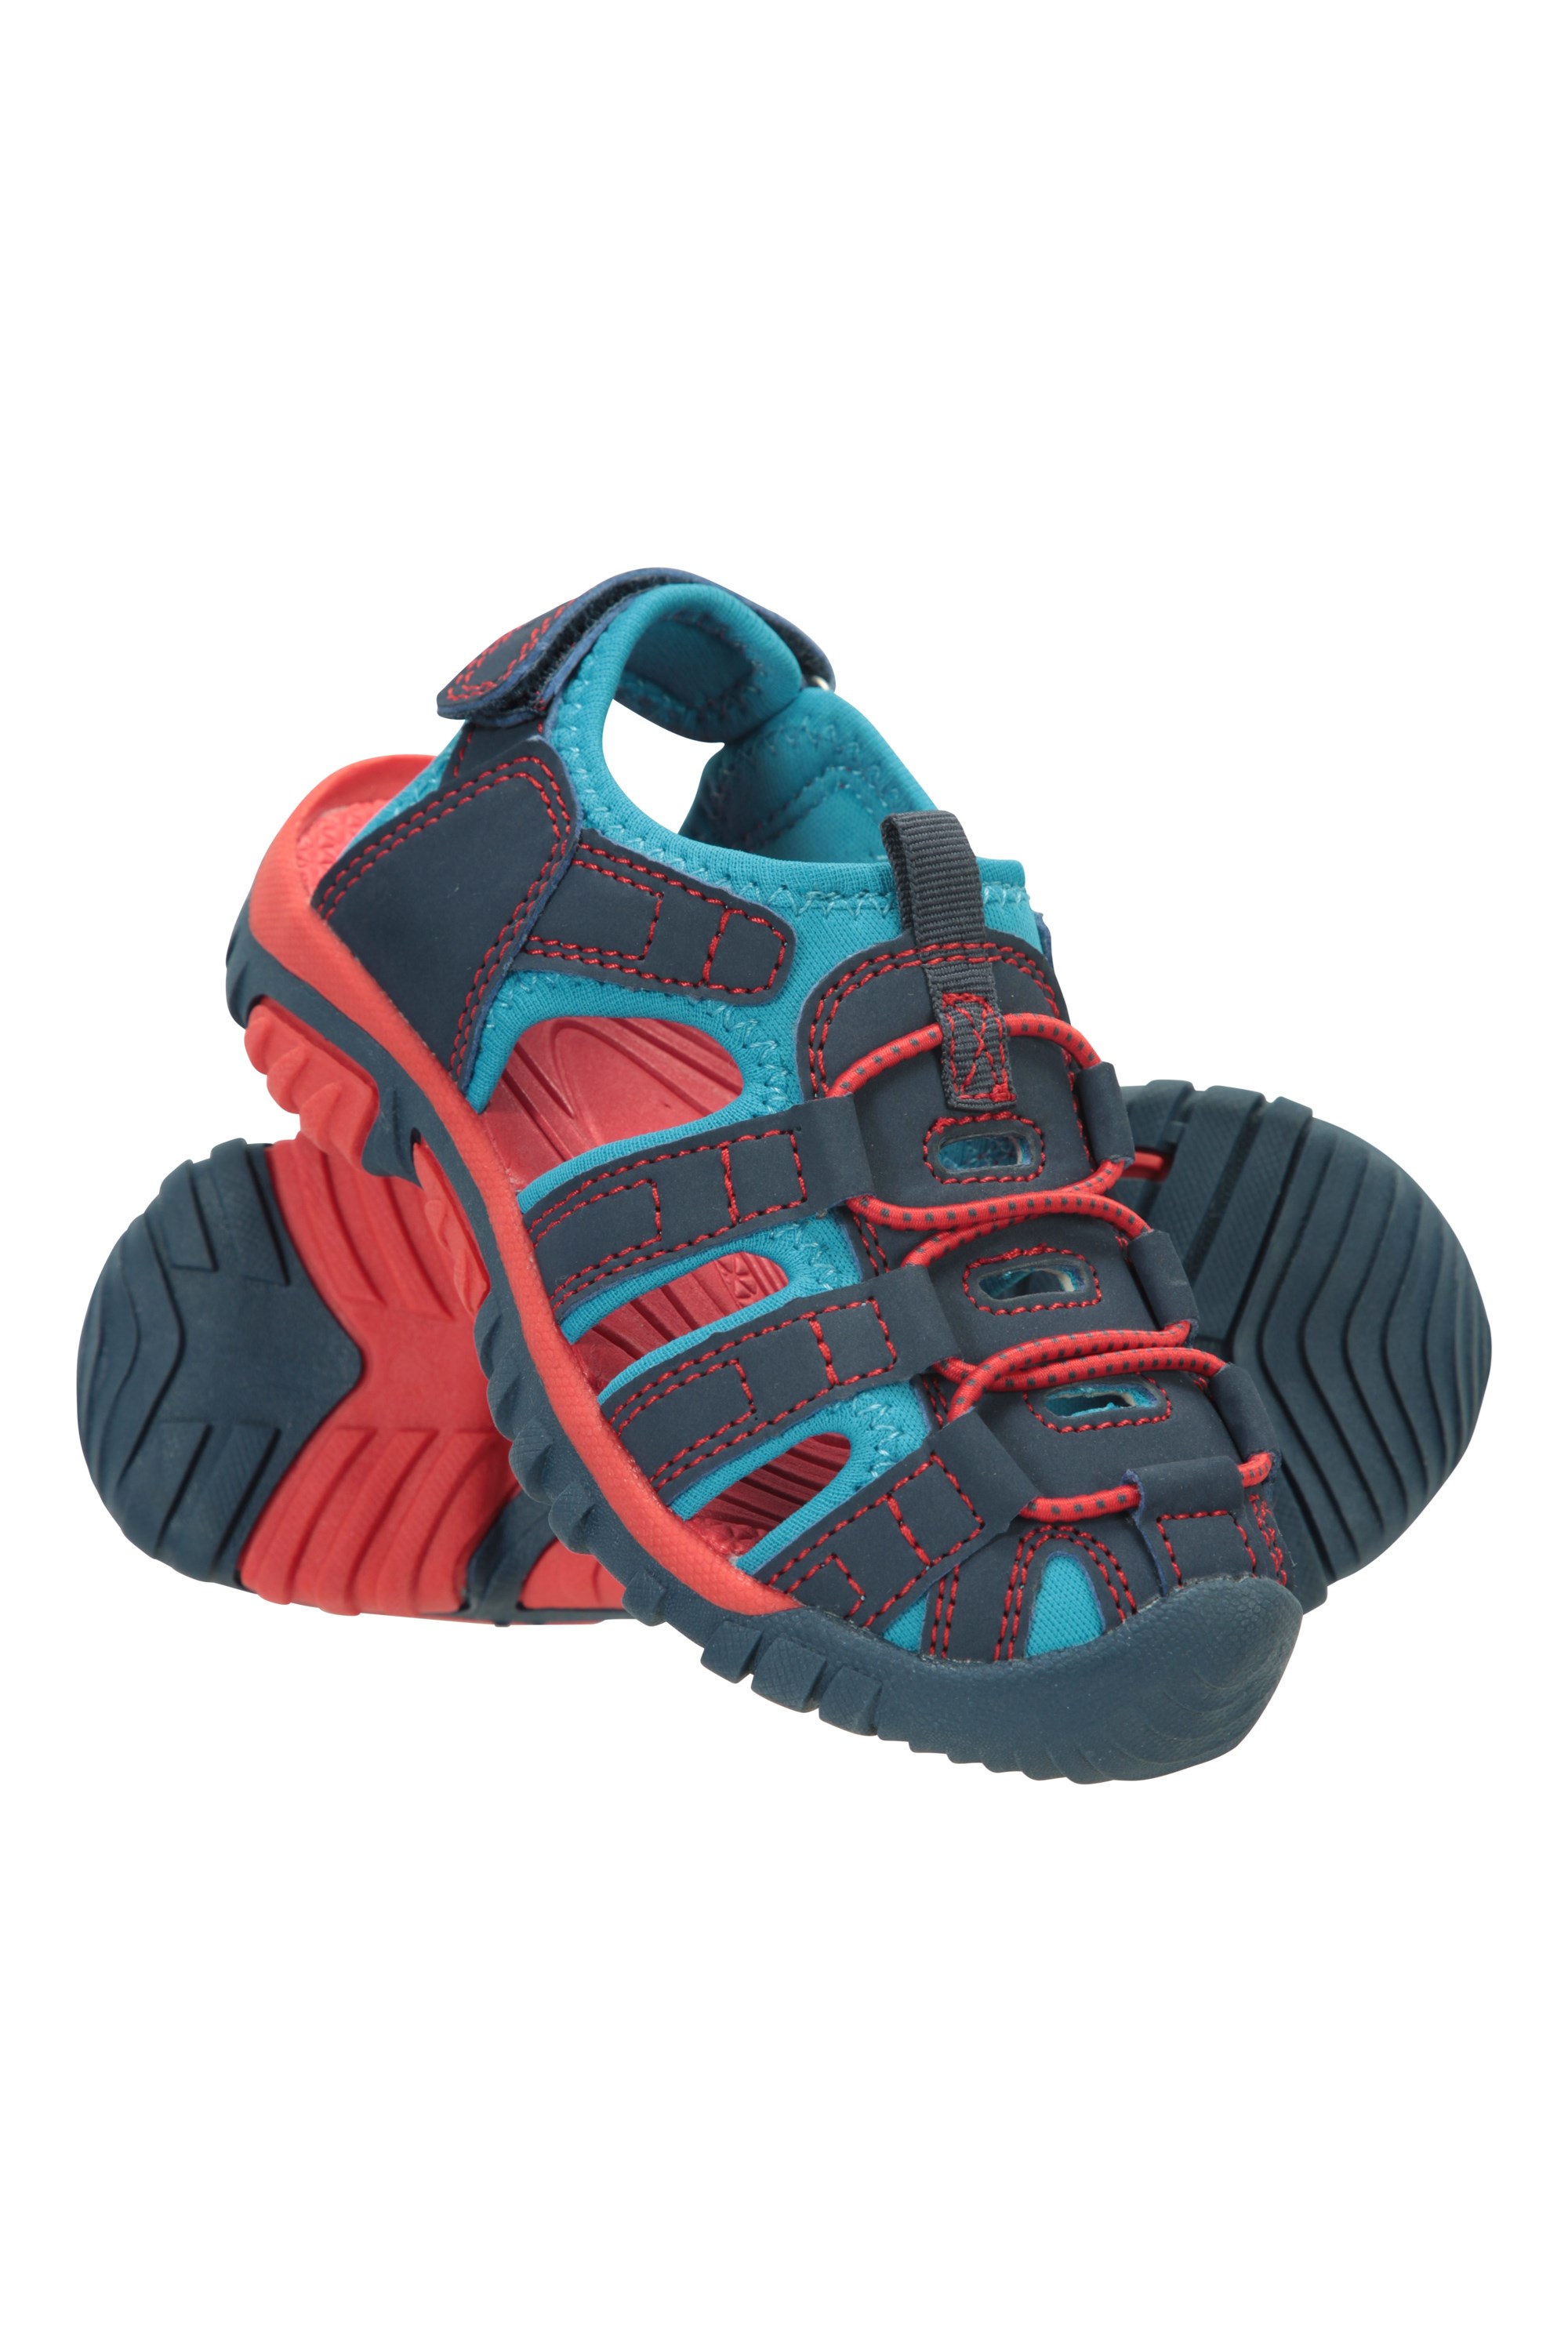 Mountain Warehouse Junior Sandals Neoprene Upper Kids Summer Shoes 